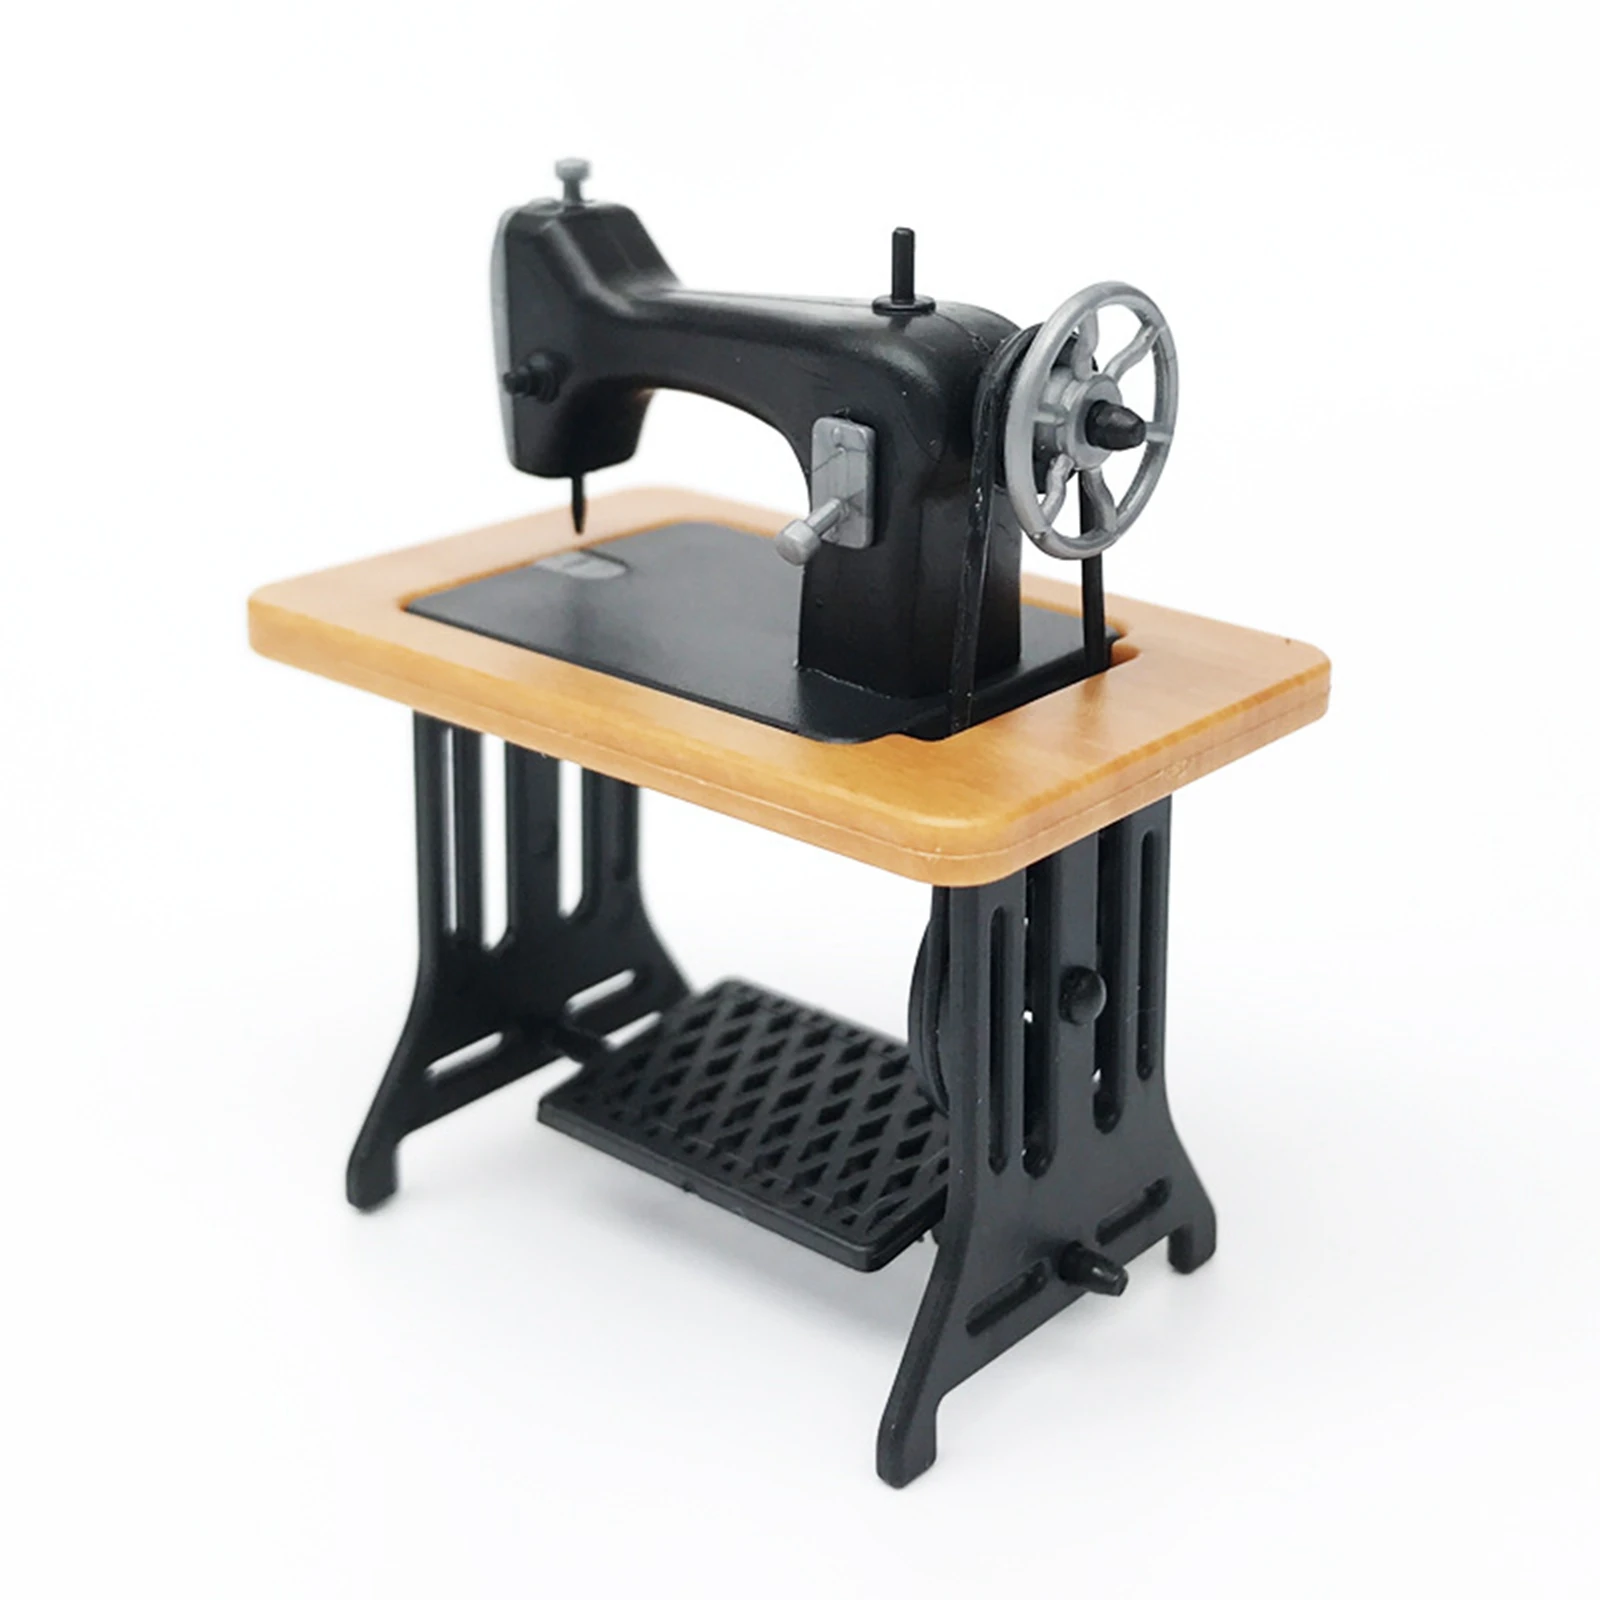 Retro Dollhouse Furniture Sewing Machine Model Decor Figurines for Children